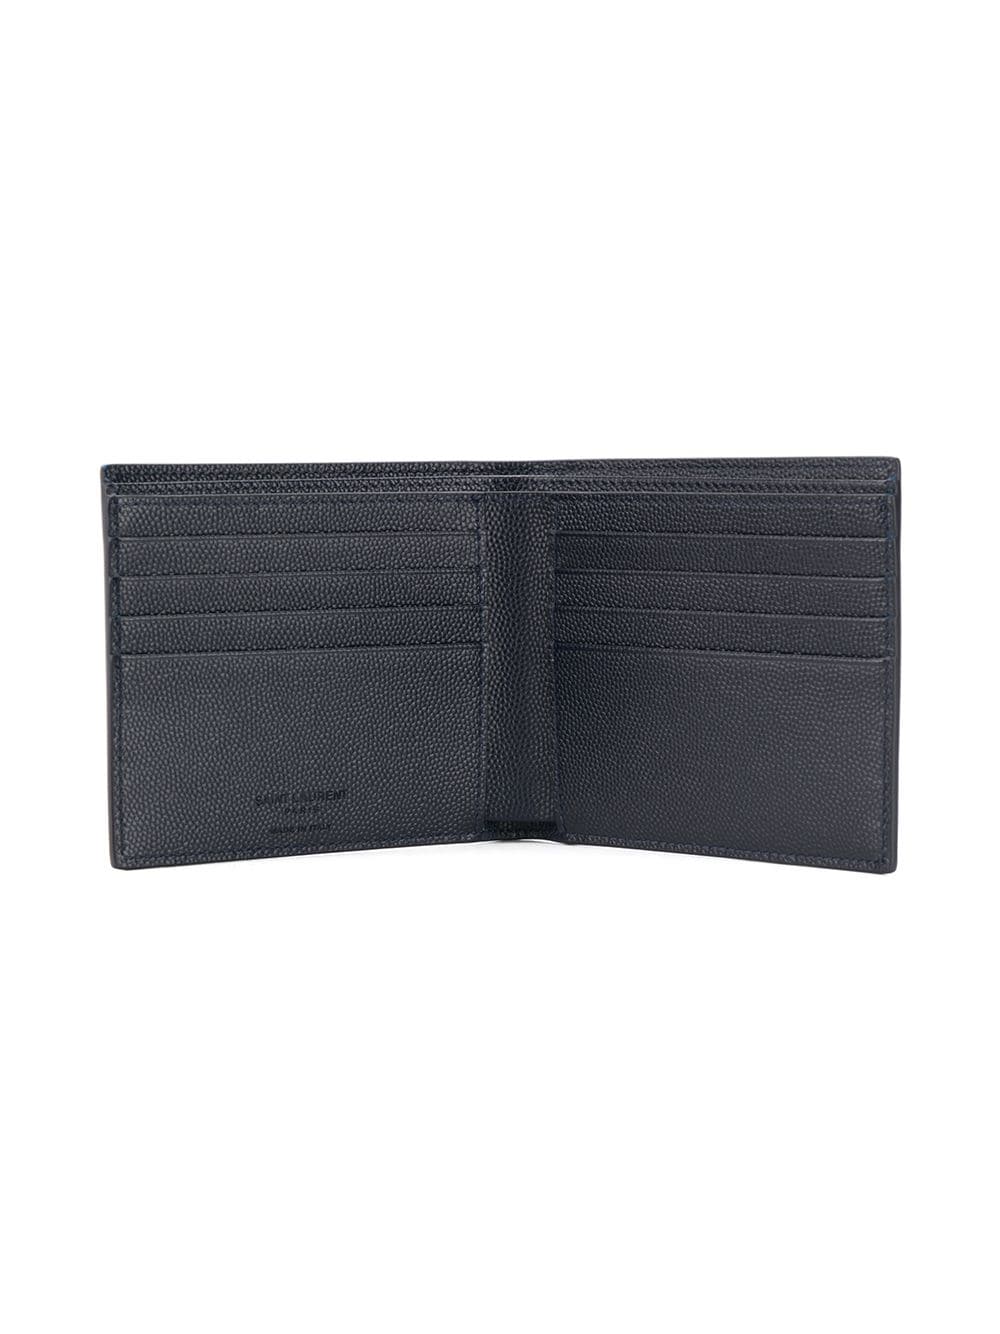 Saint Laurent textured bi-fold wallet